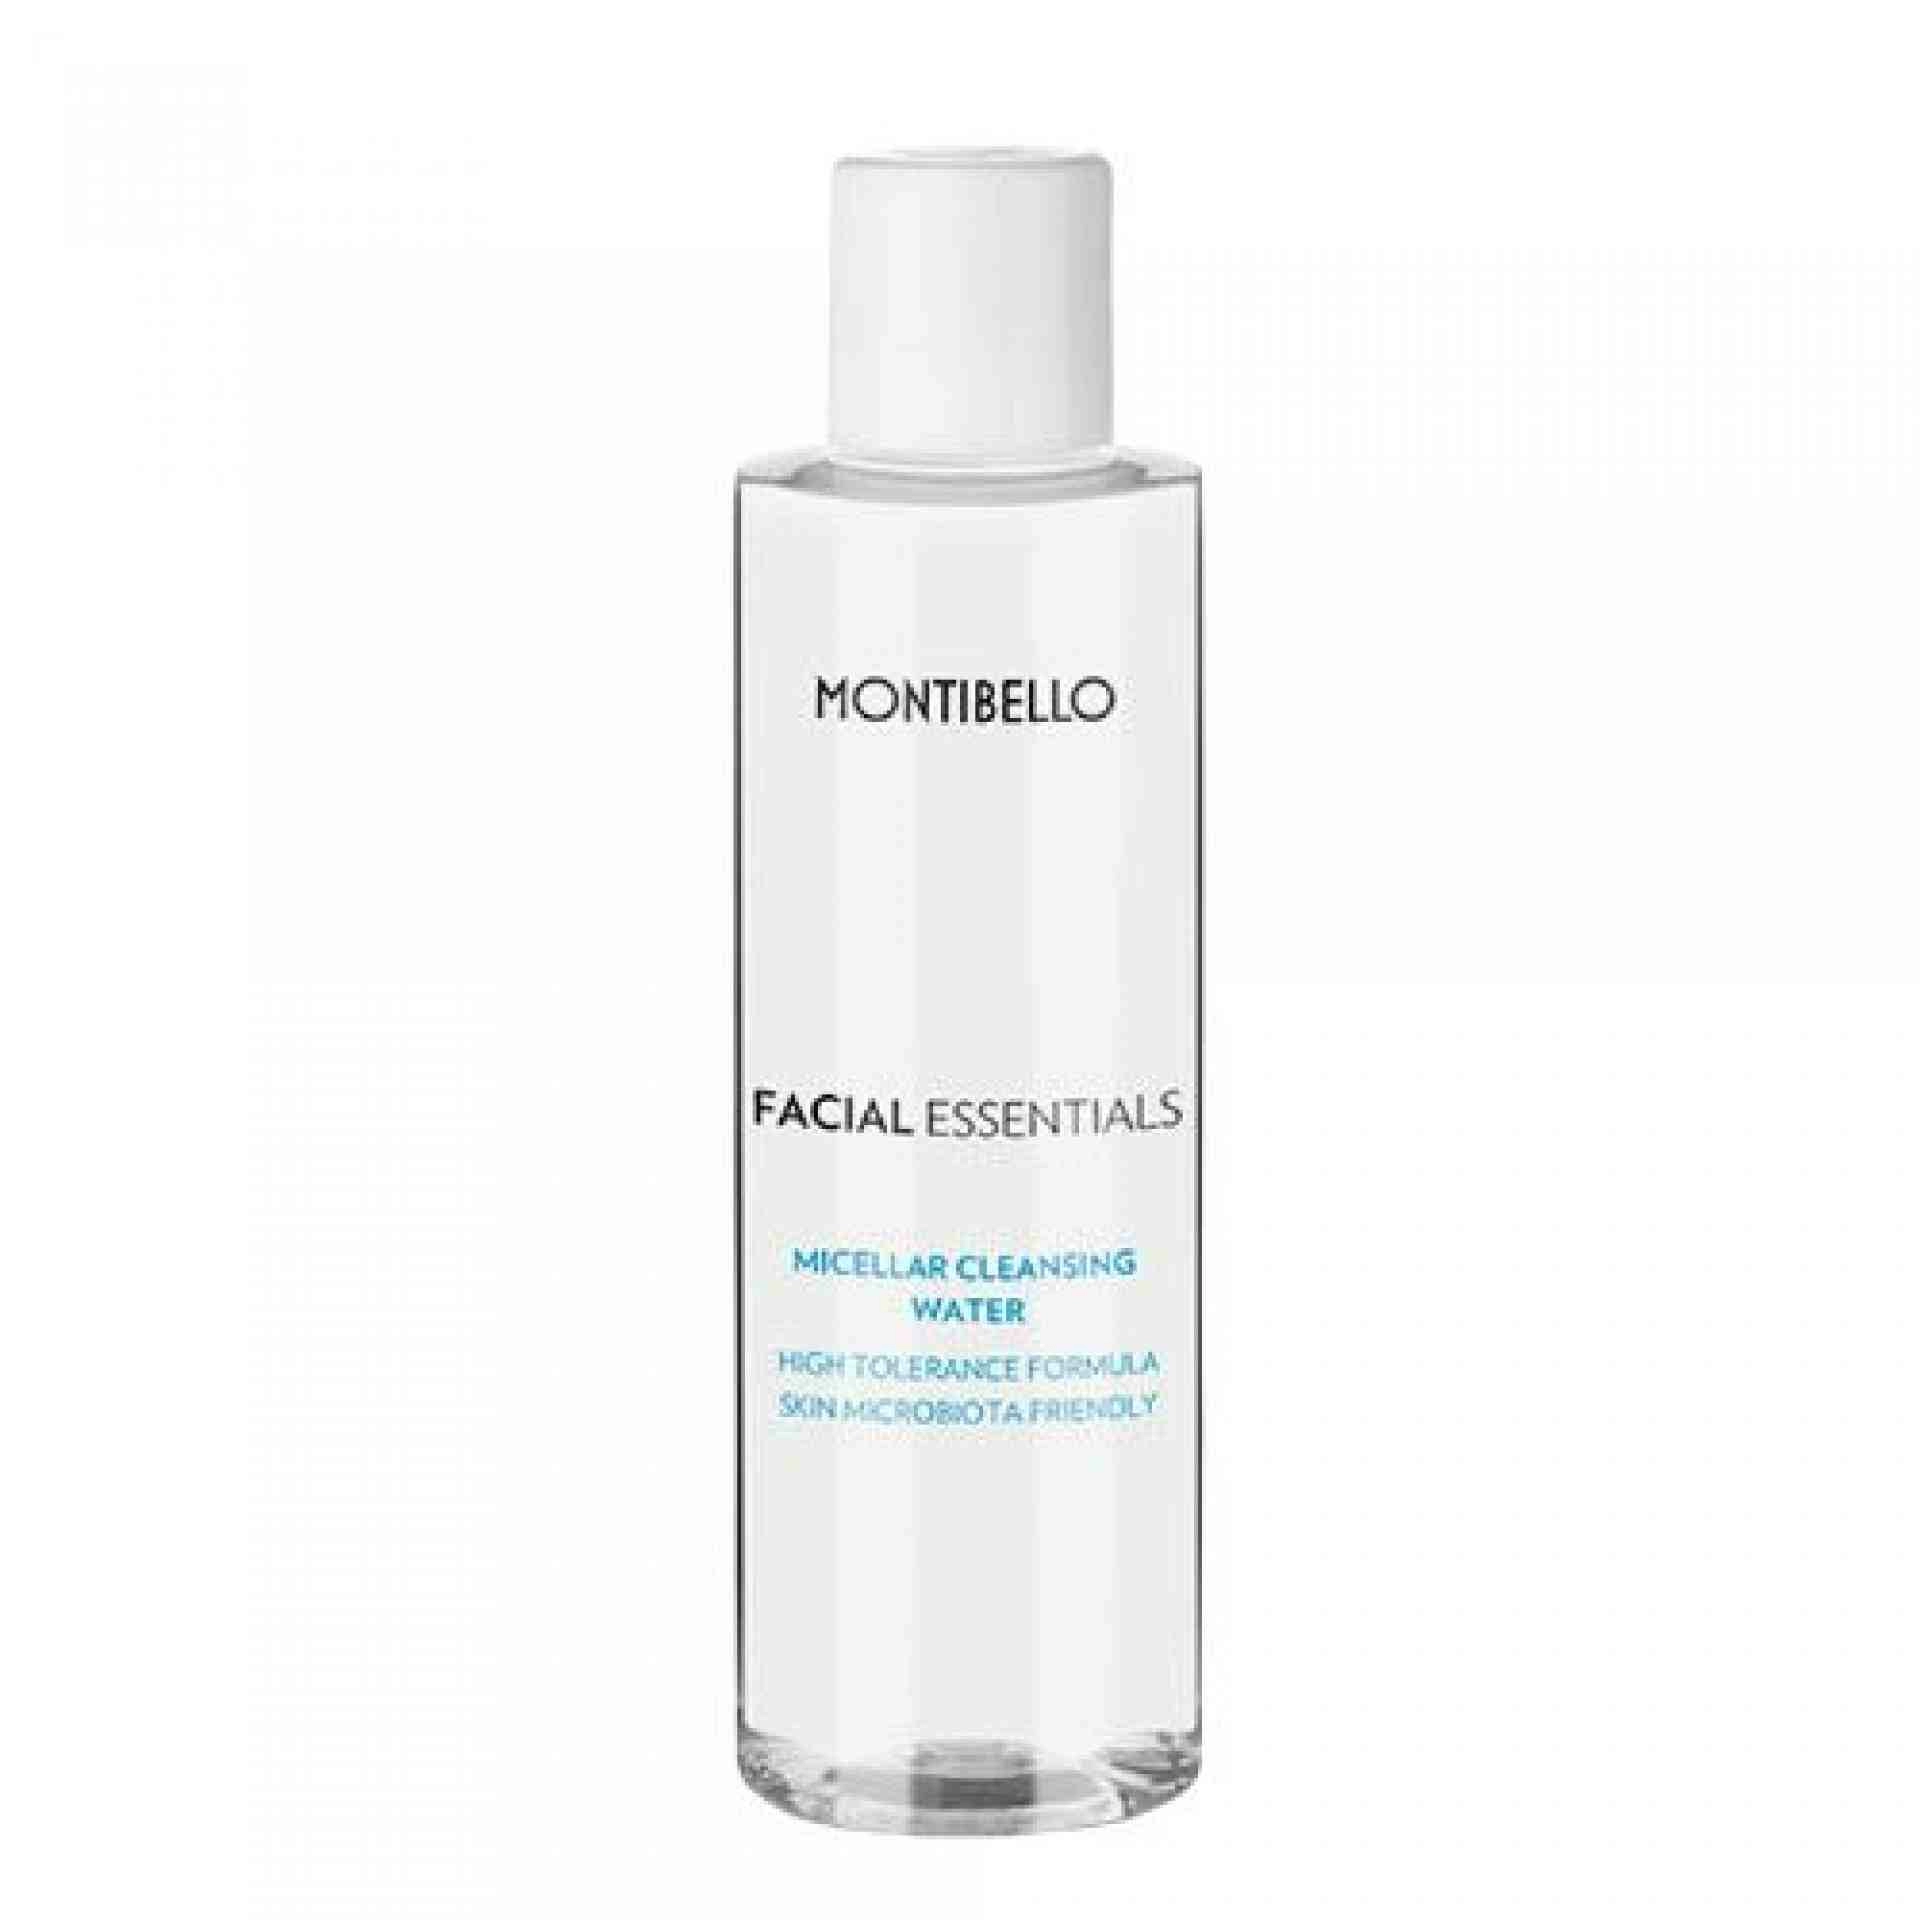 Micellar Water | Agua Micelar 200ml - Facial Essentials - Montibello ®